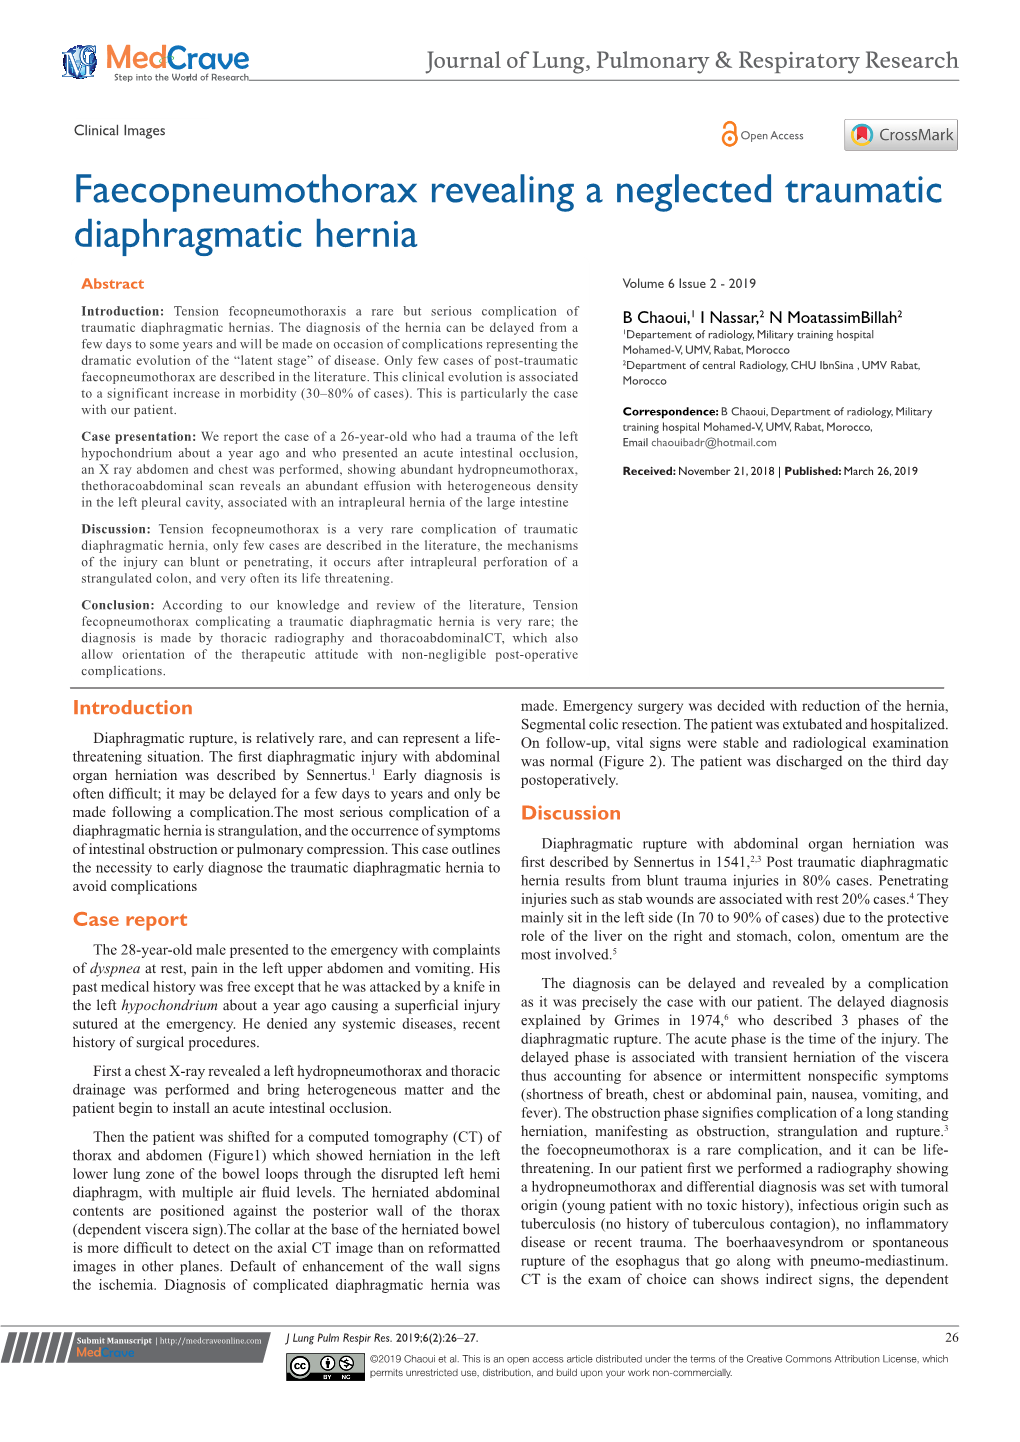 Faecopneumothorax Revealing a Neglected Traumatic Diaphragmatic Hernia